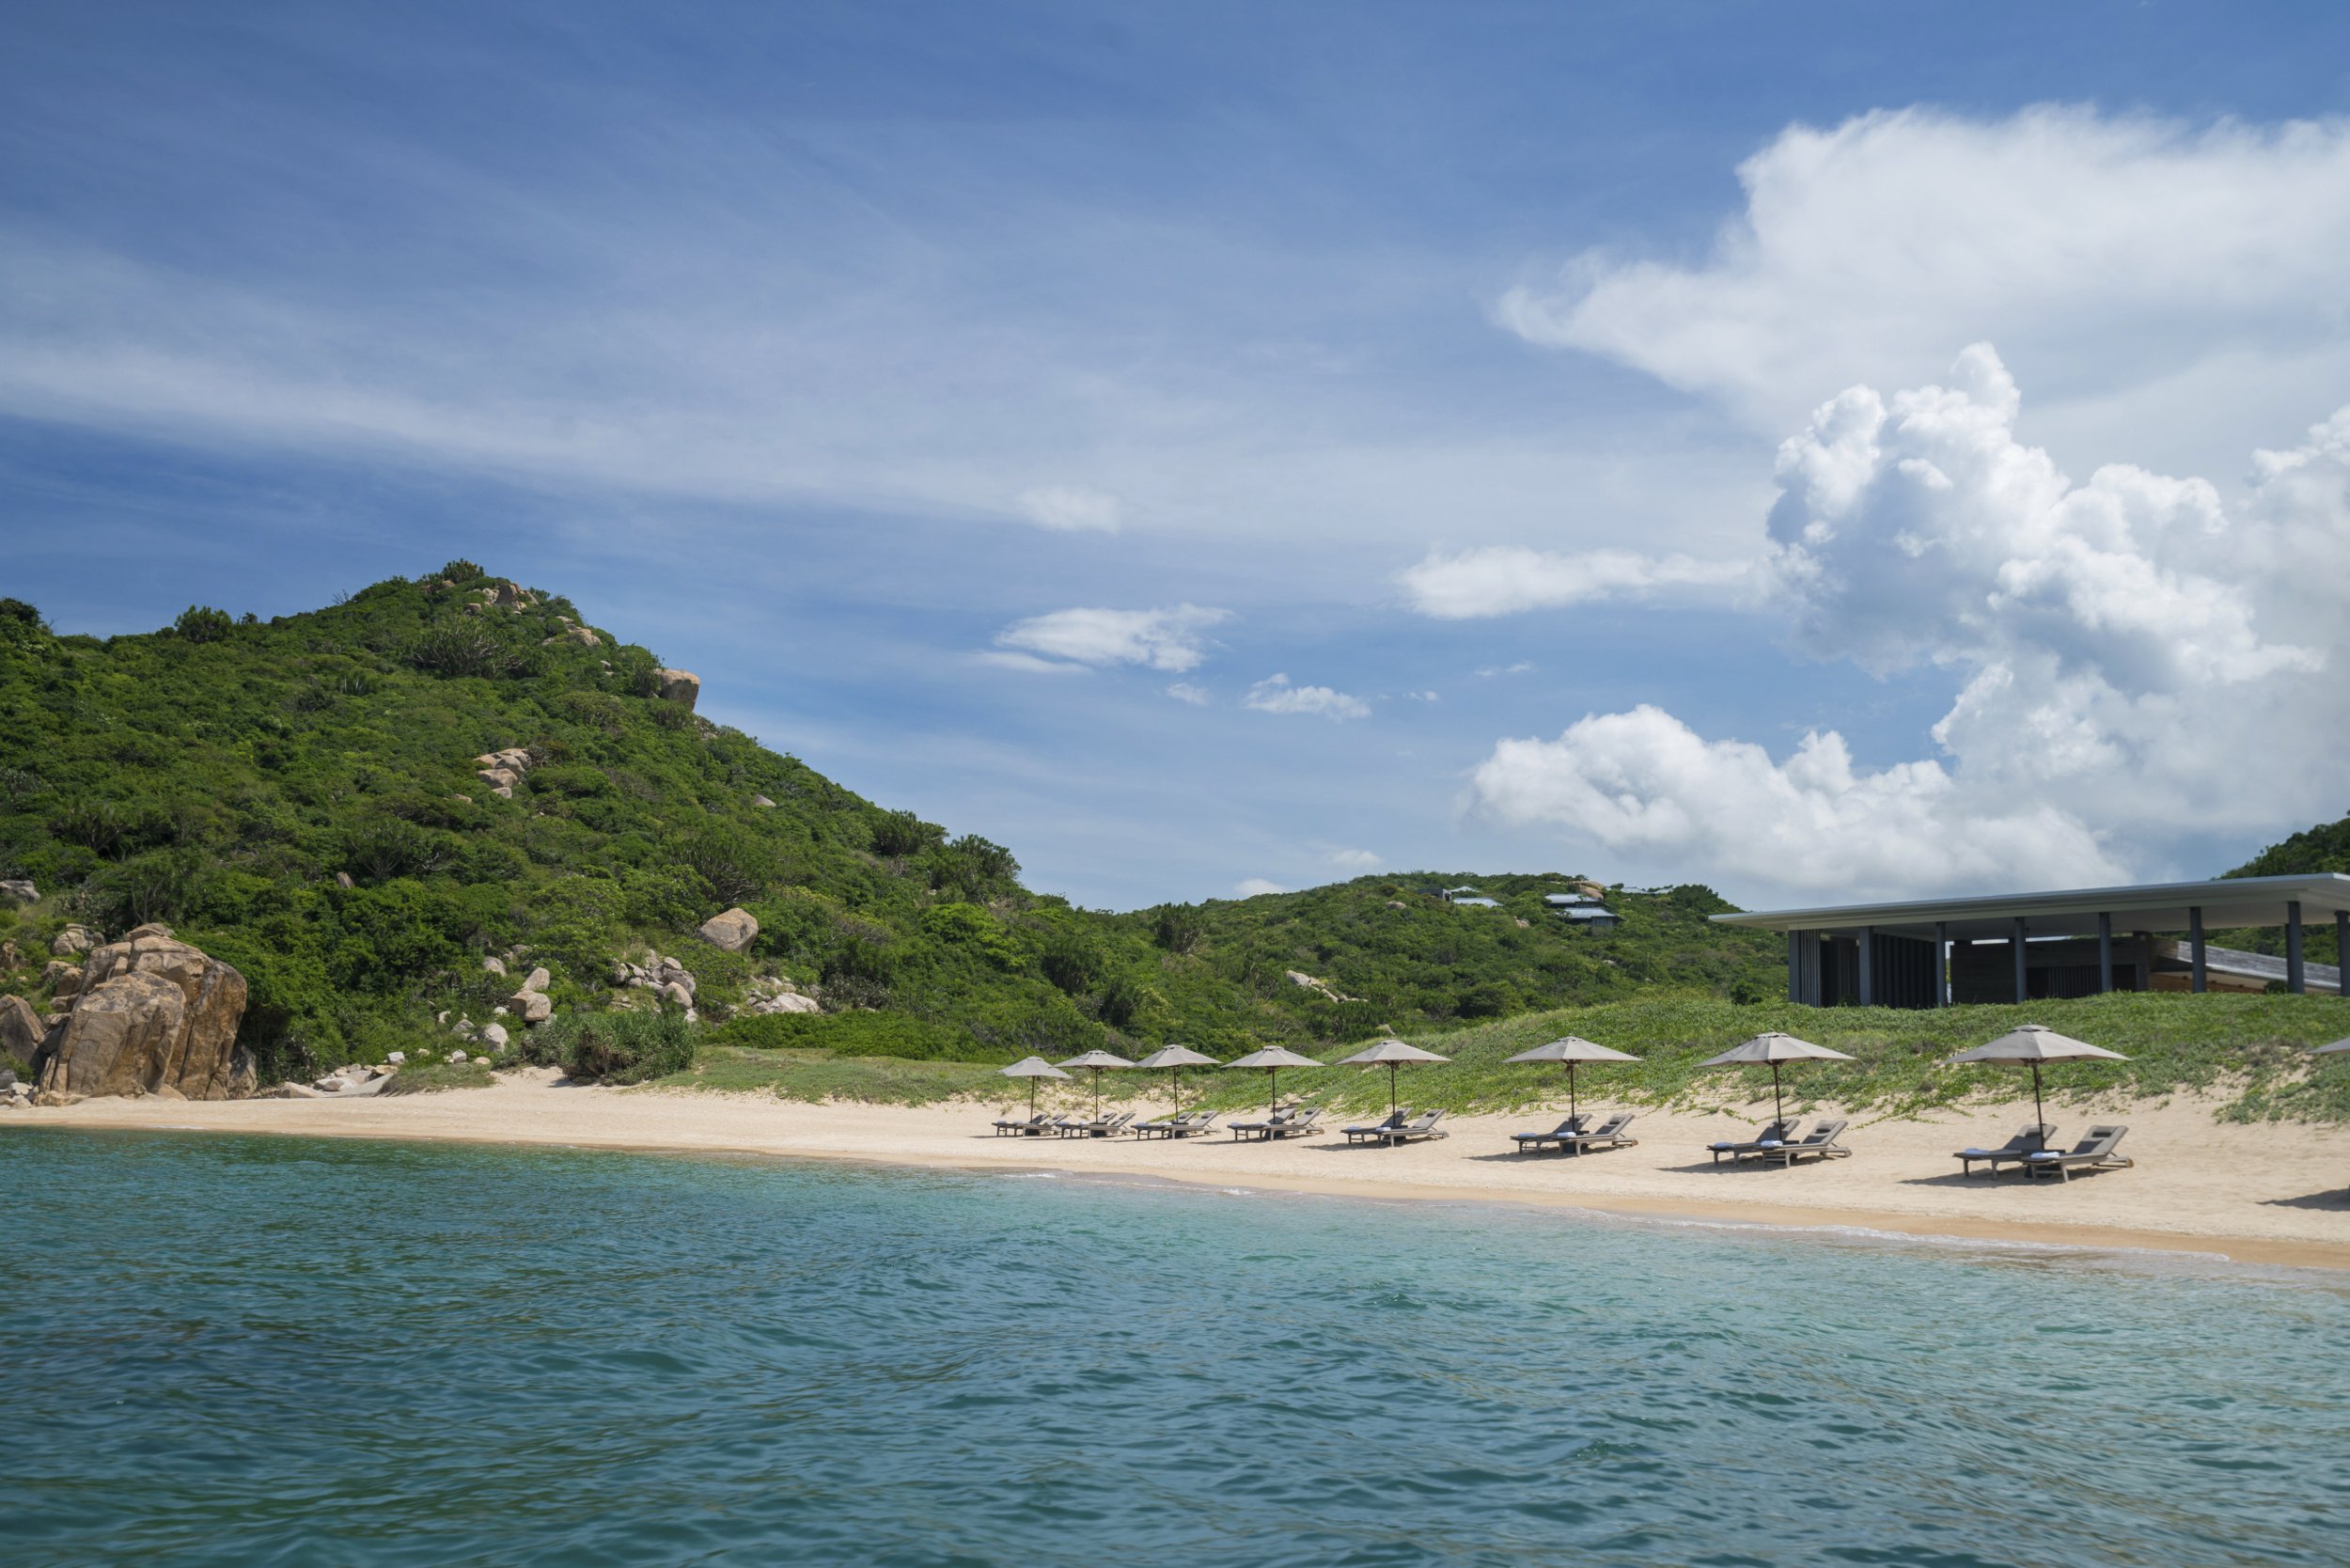 Amanoi, Vietnam - Resort, Private beach, sunlounge_High Res_14688.jpg